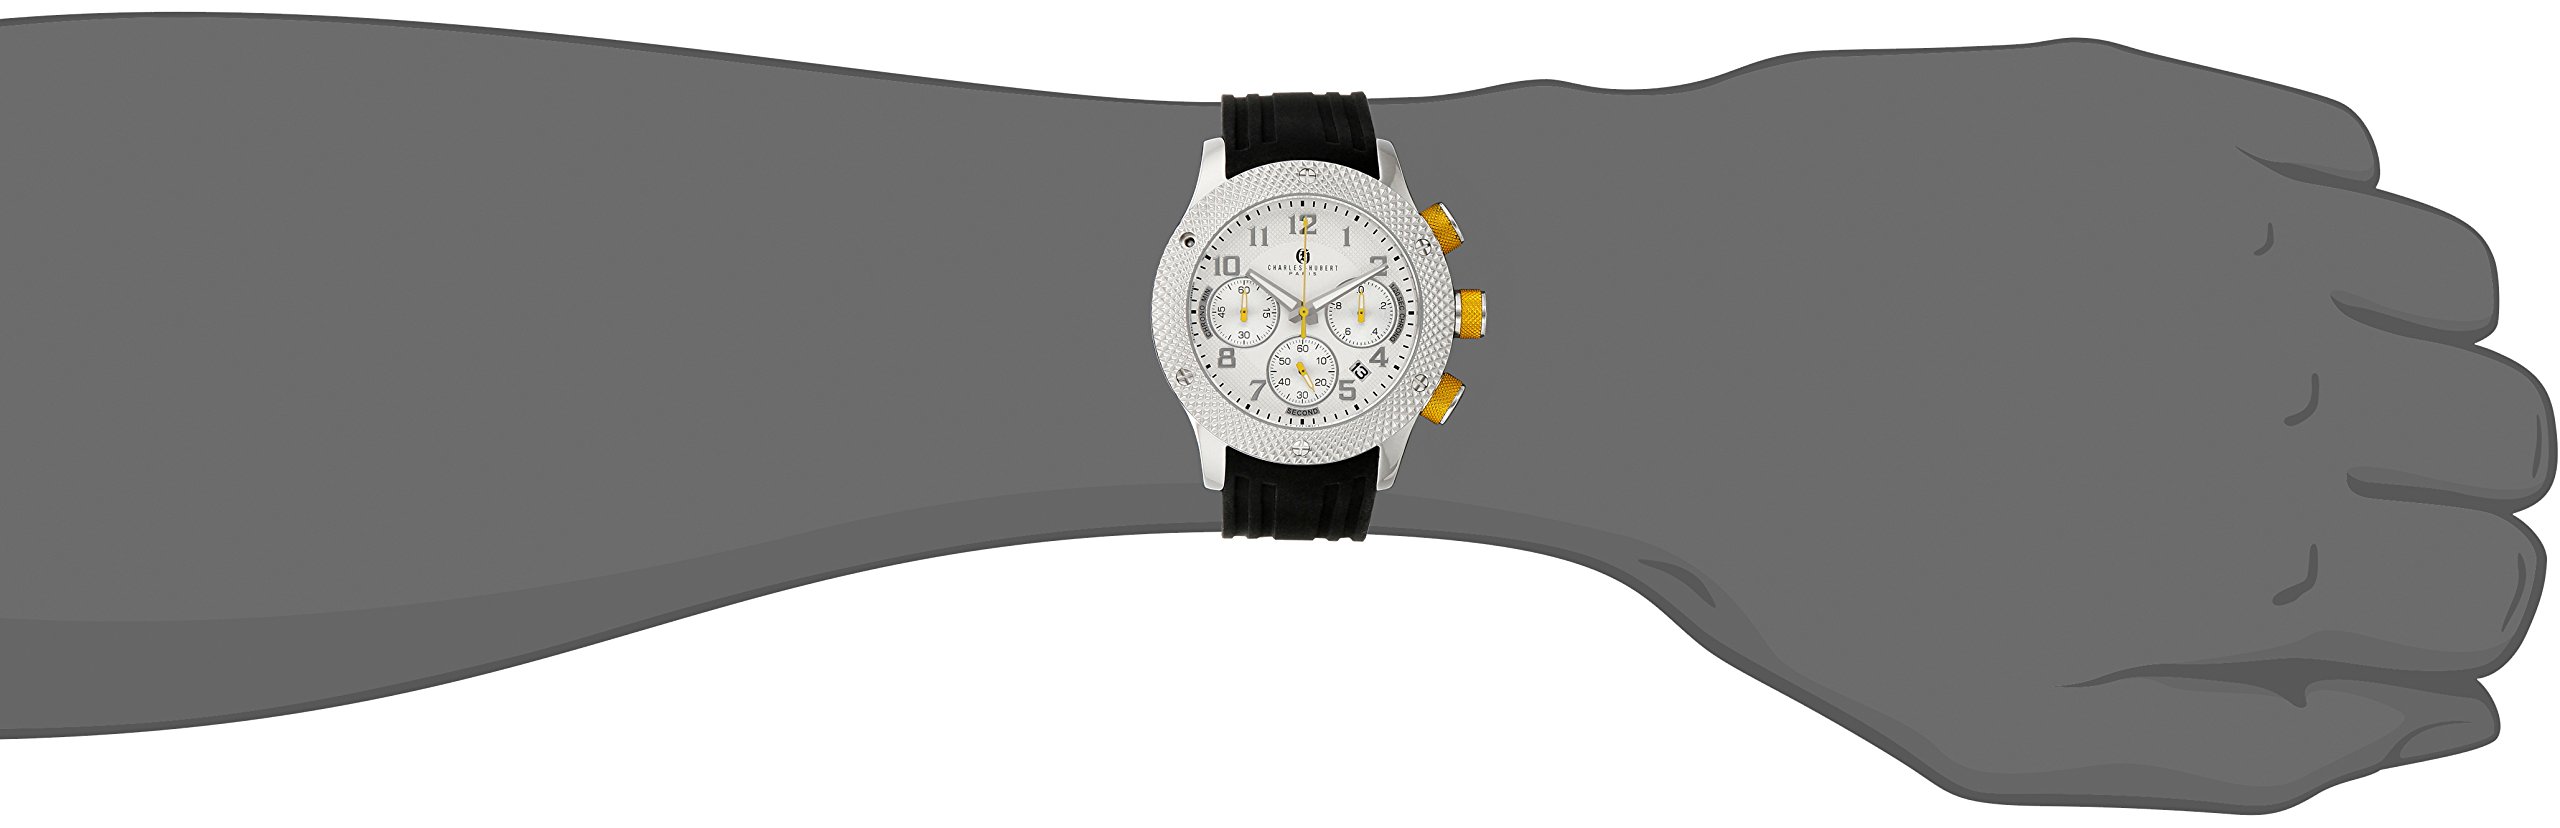 CHARLES-HUBERT PARIS Men's 3979-A Premium Collection Analog Display Japanese Quartz Black Watch